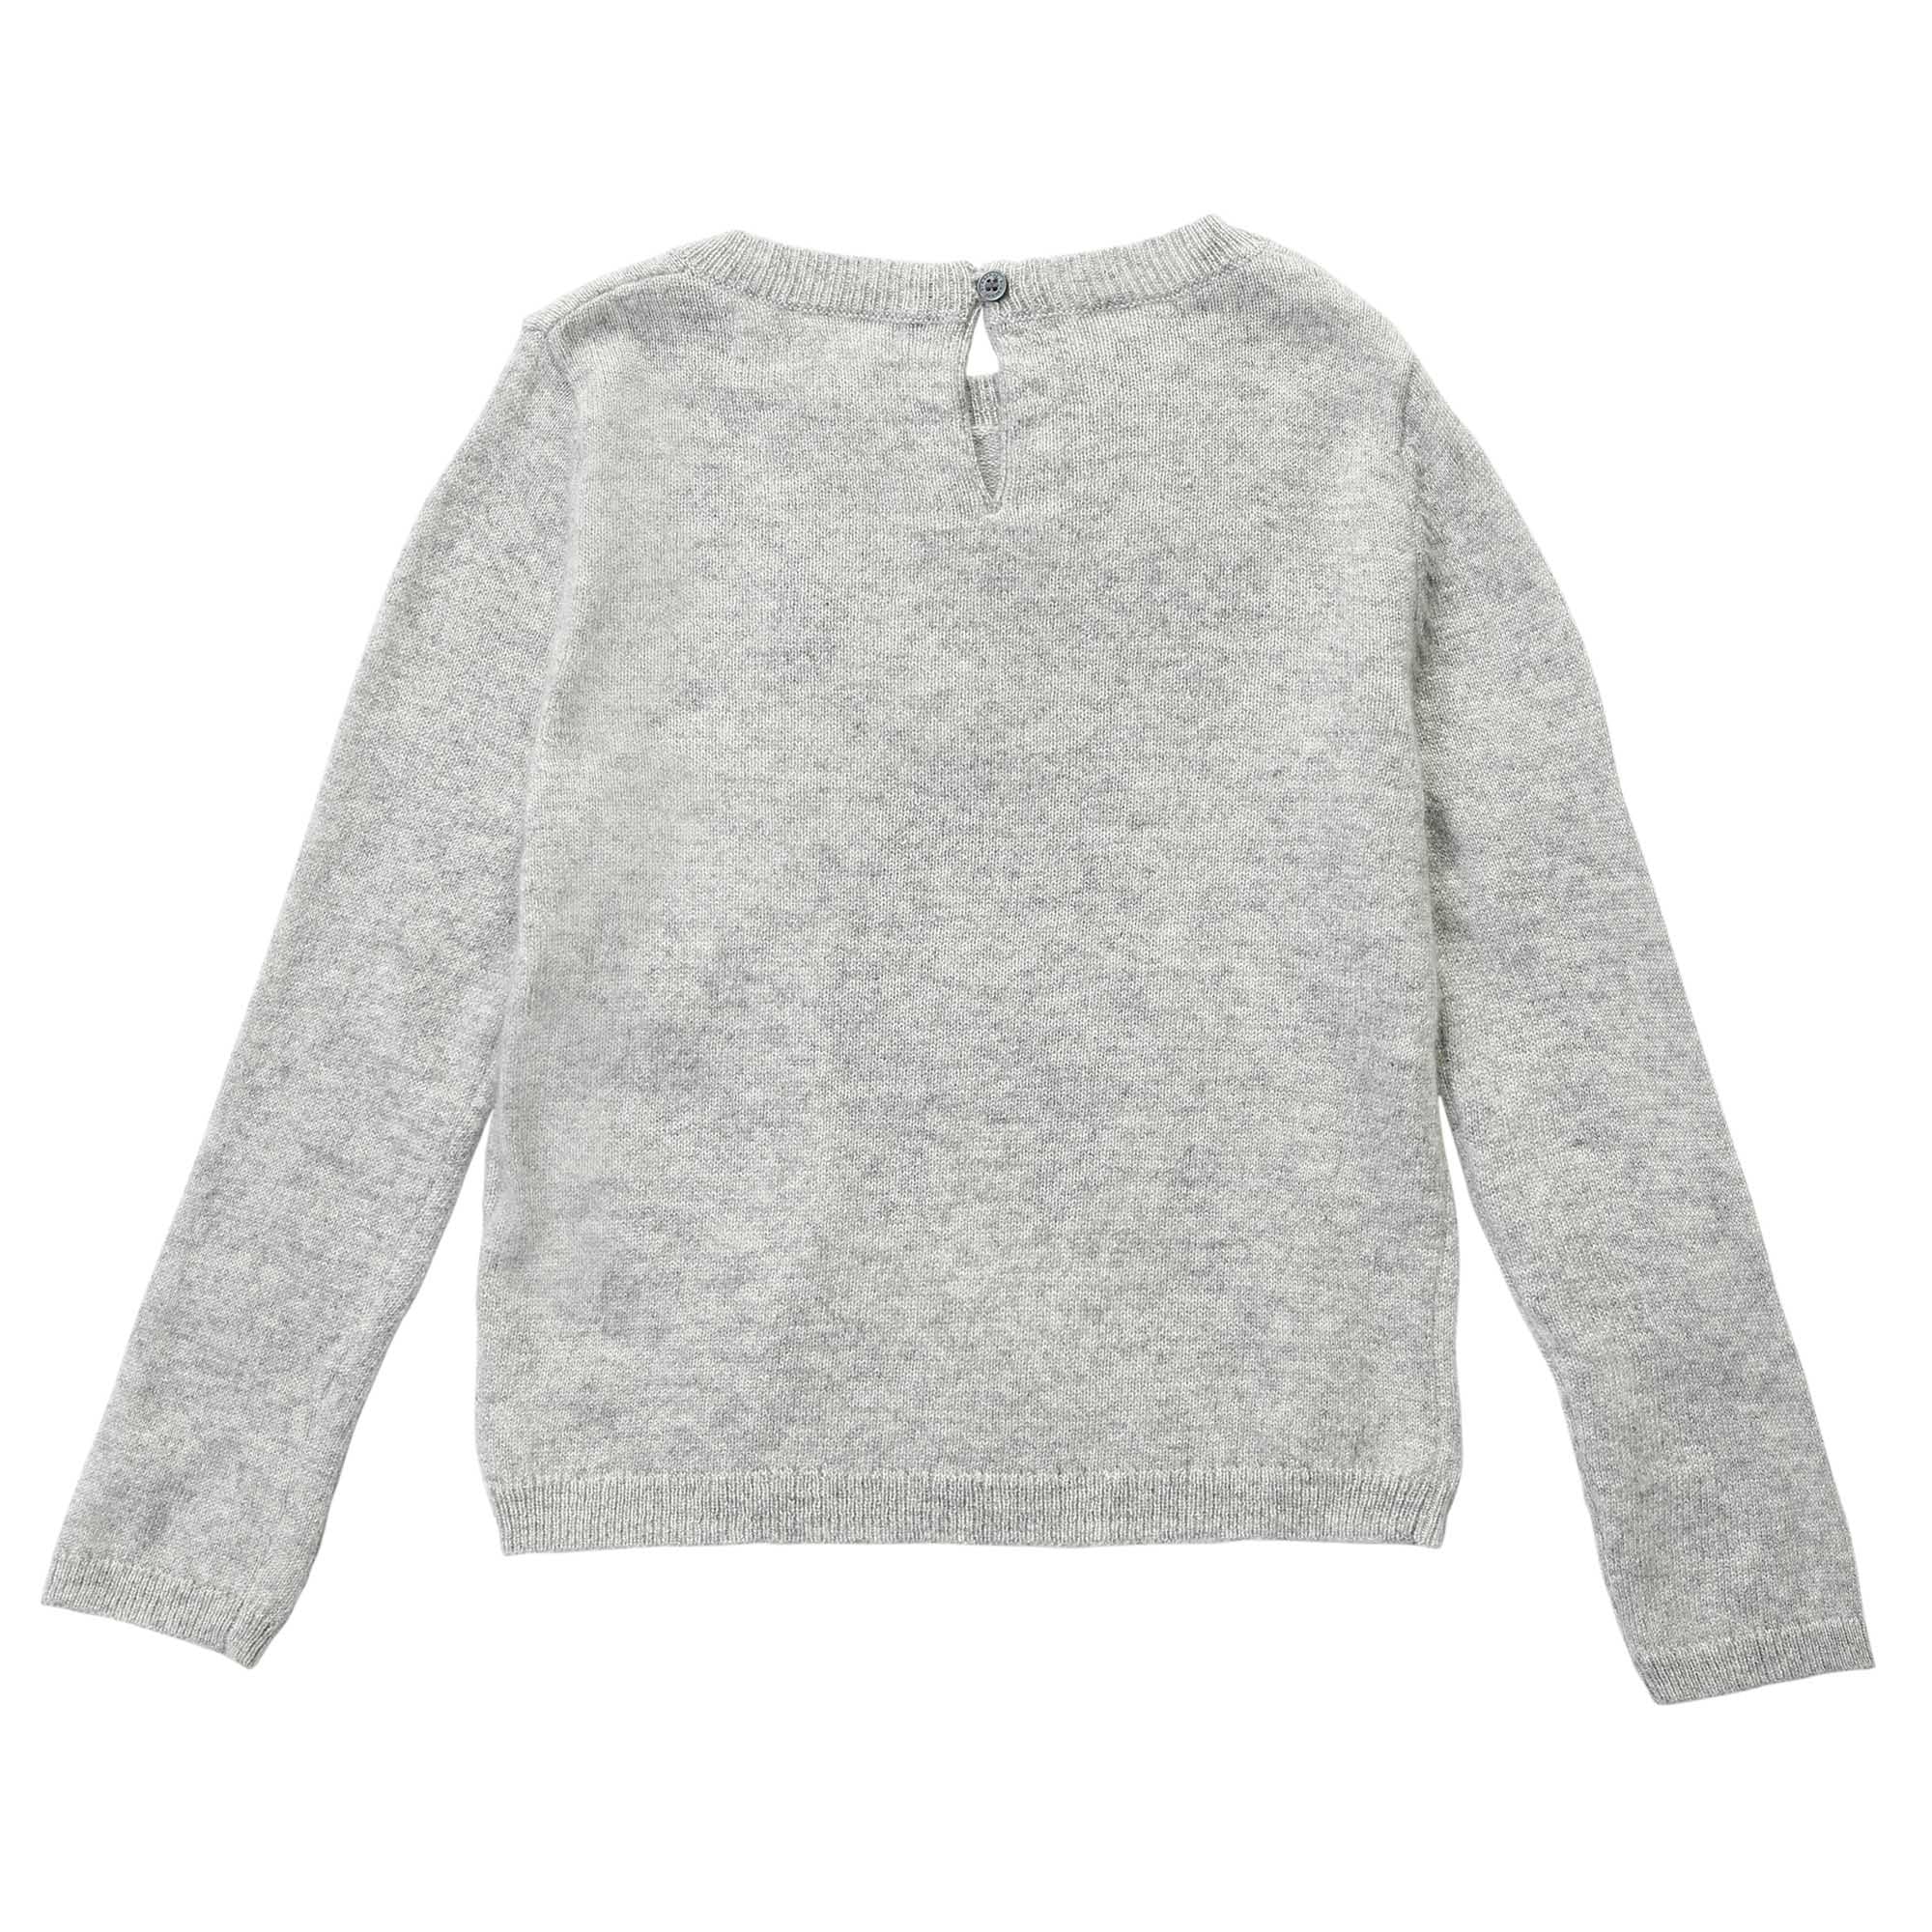 Baby Girls Light Grey Cashmere Sweater - CÉMAROSE | Children's Fashion Store - 2